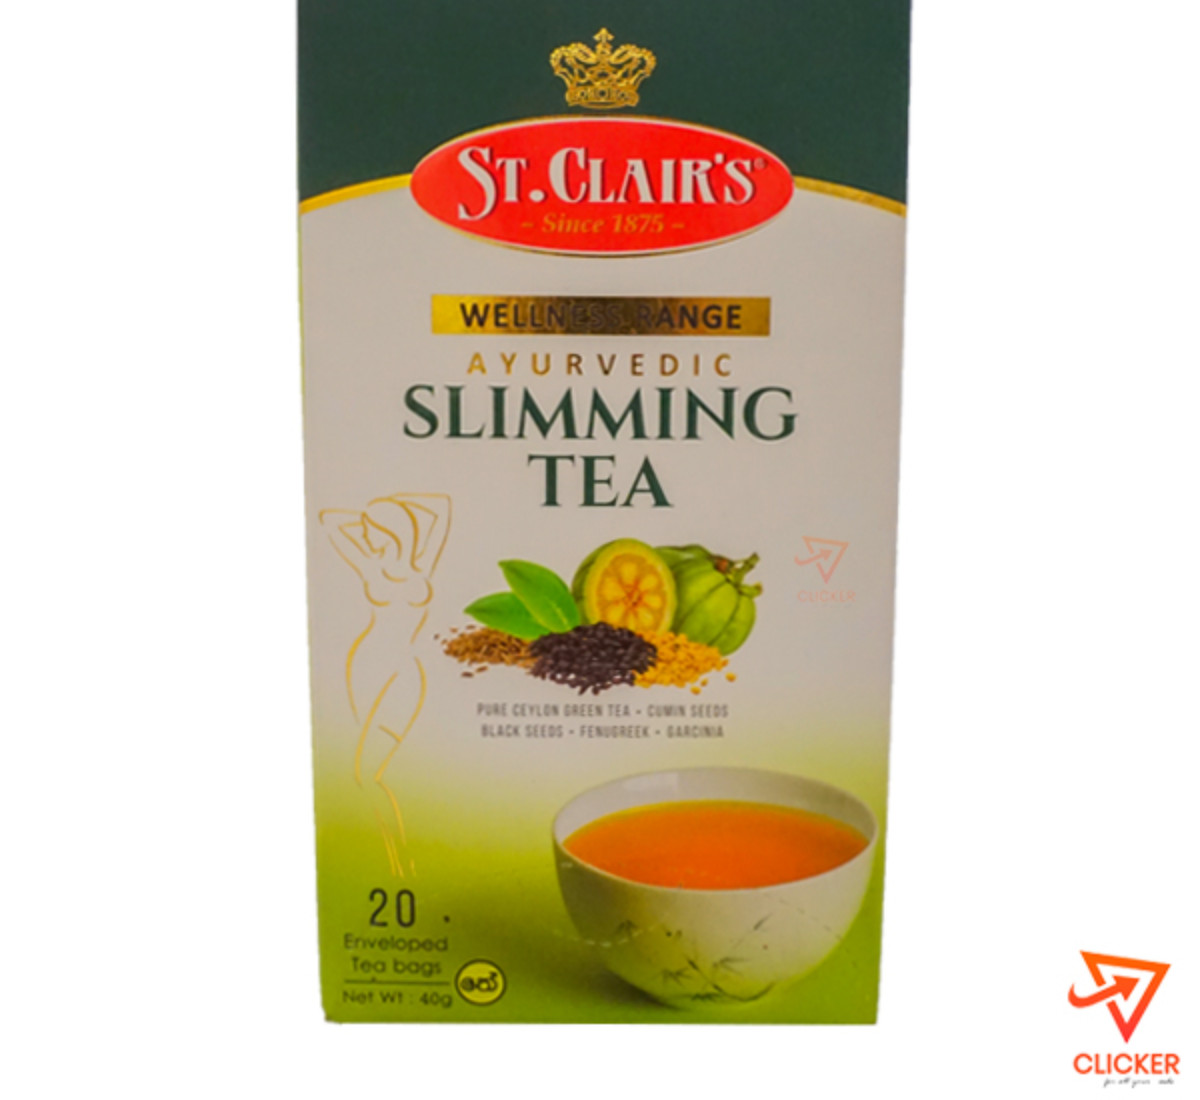 Clicker product ST.CLAIR'S Ayurvedic slimming tea 942